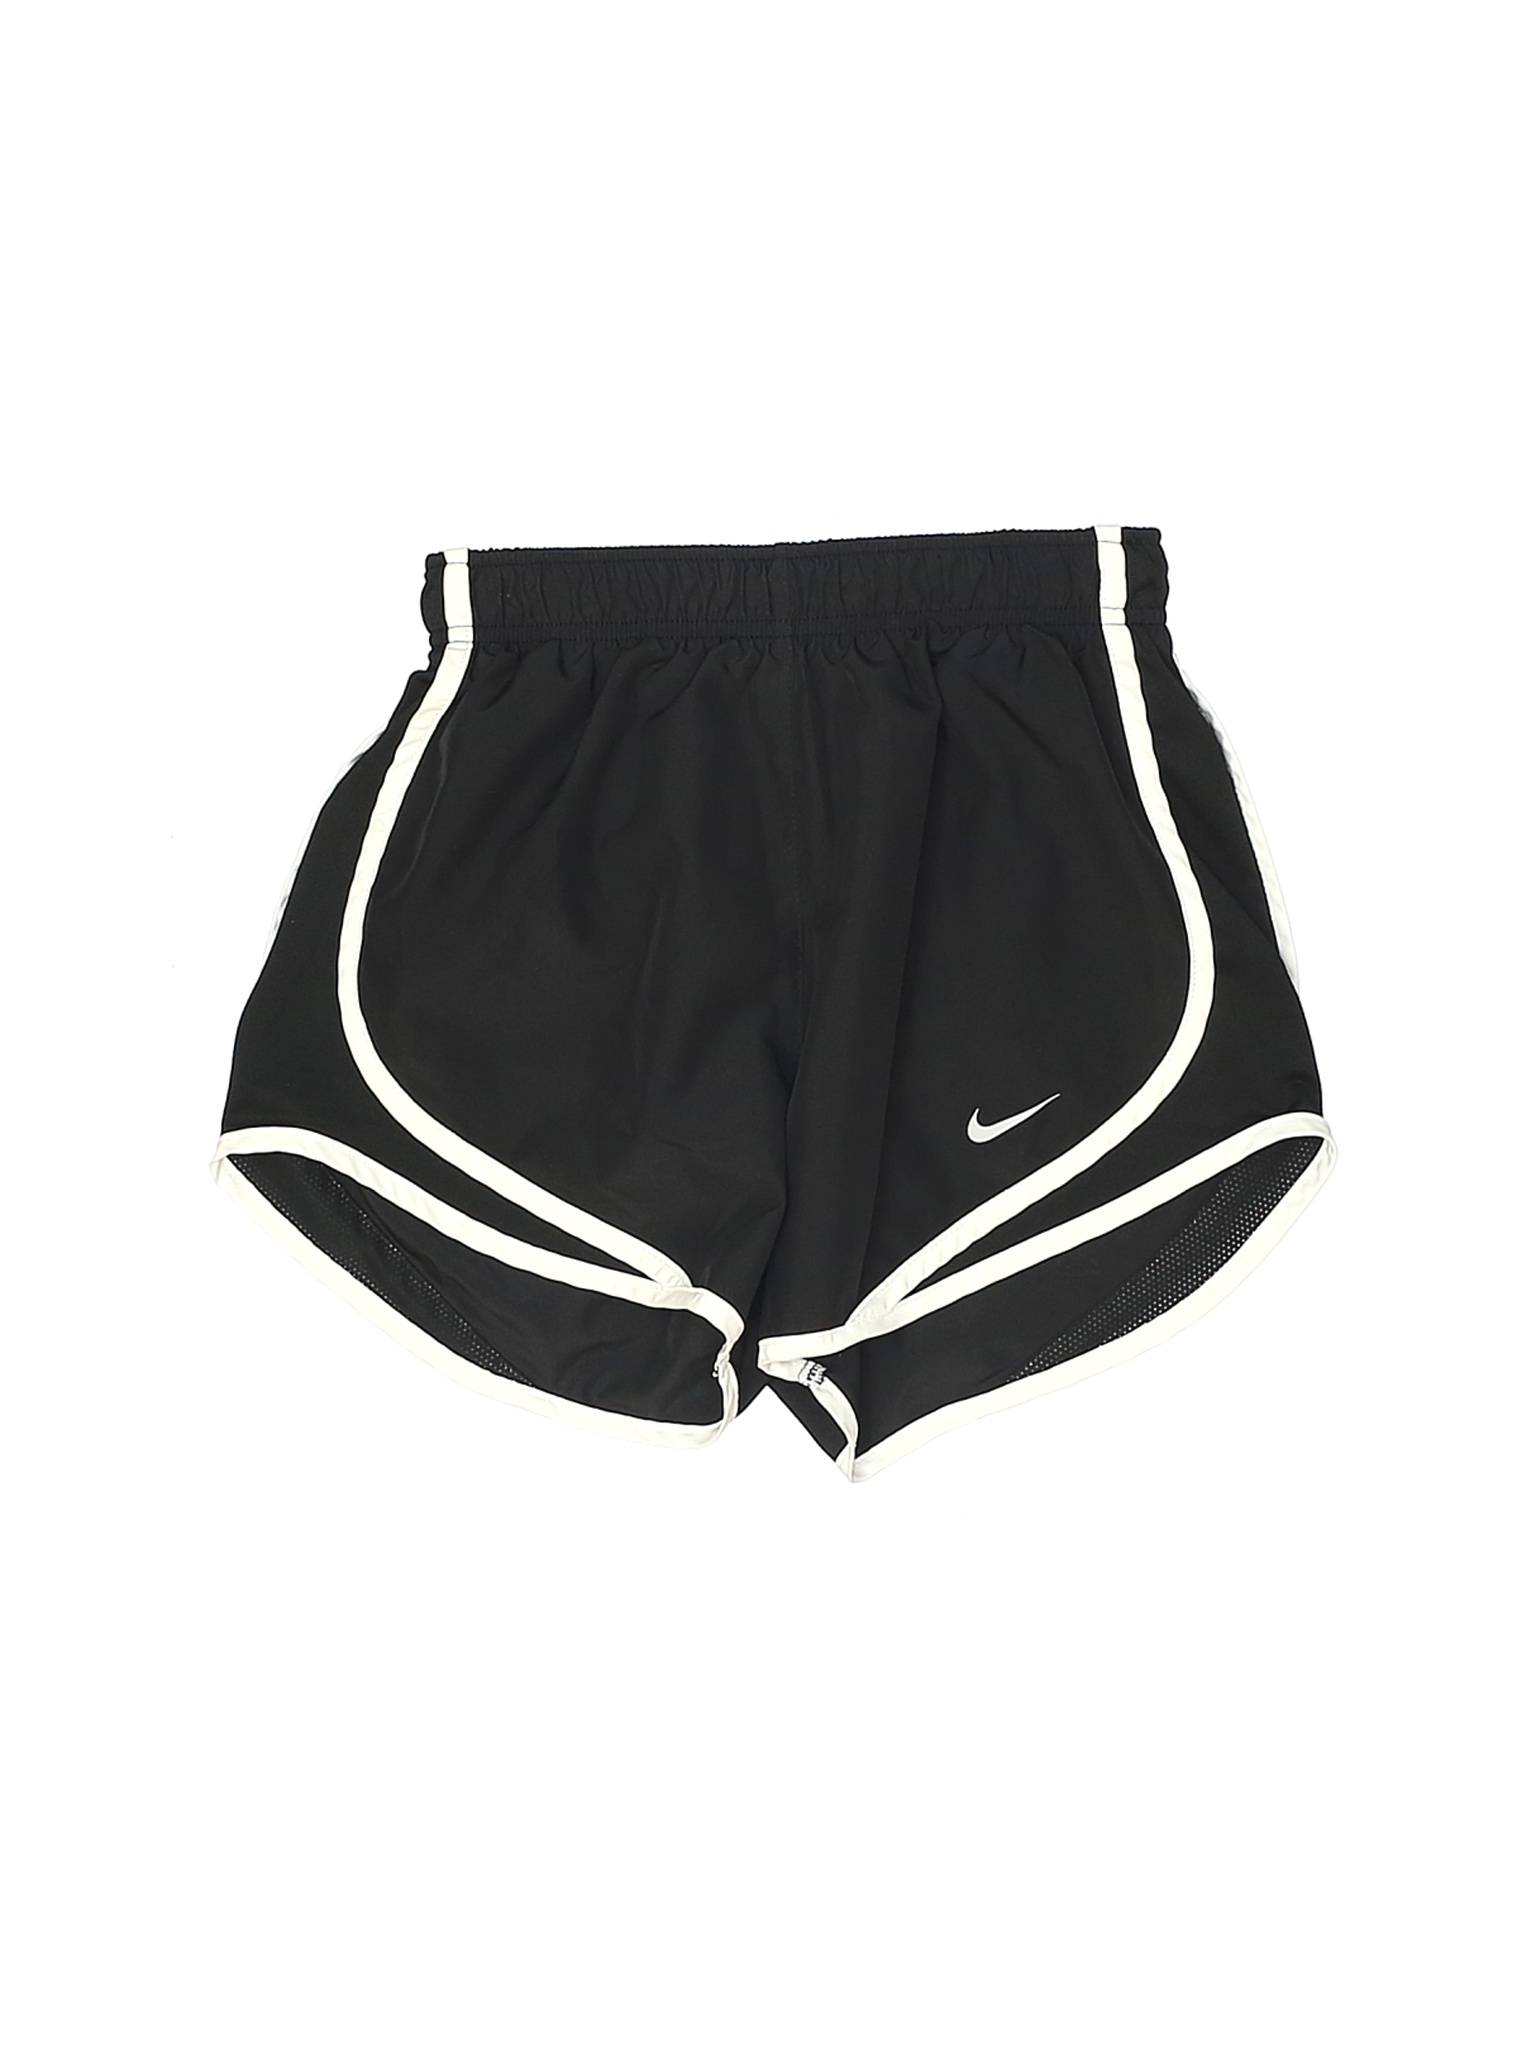 Nike Girls Black Athletic Shorts XS Youth | eBay